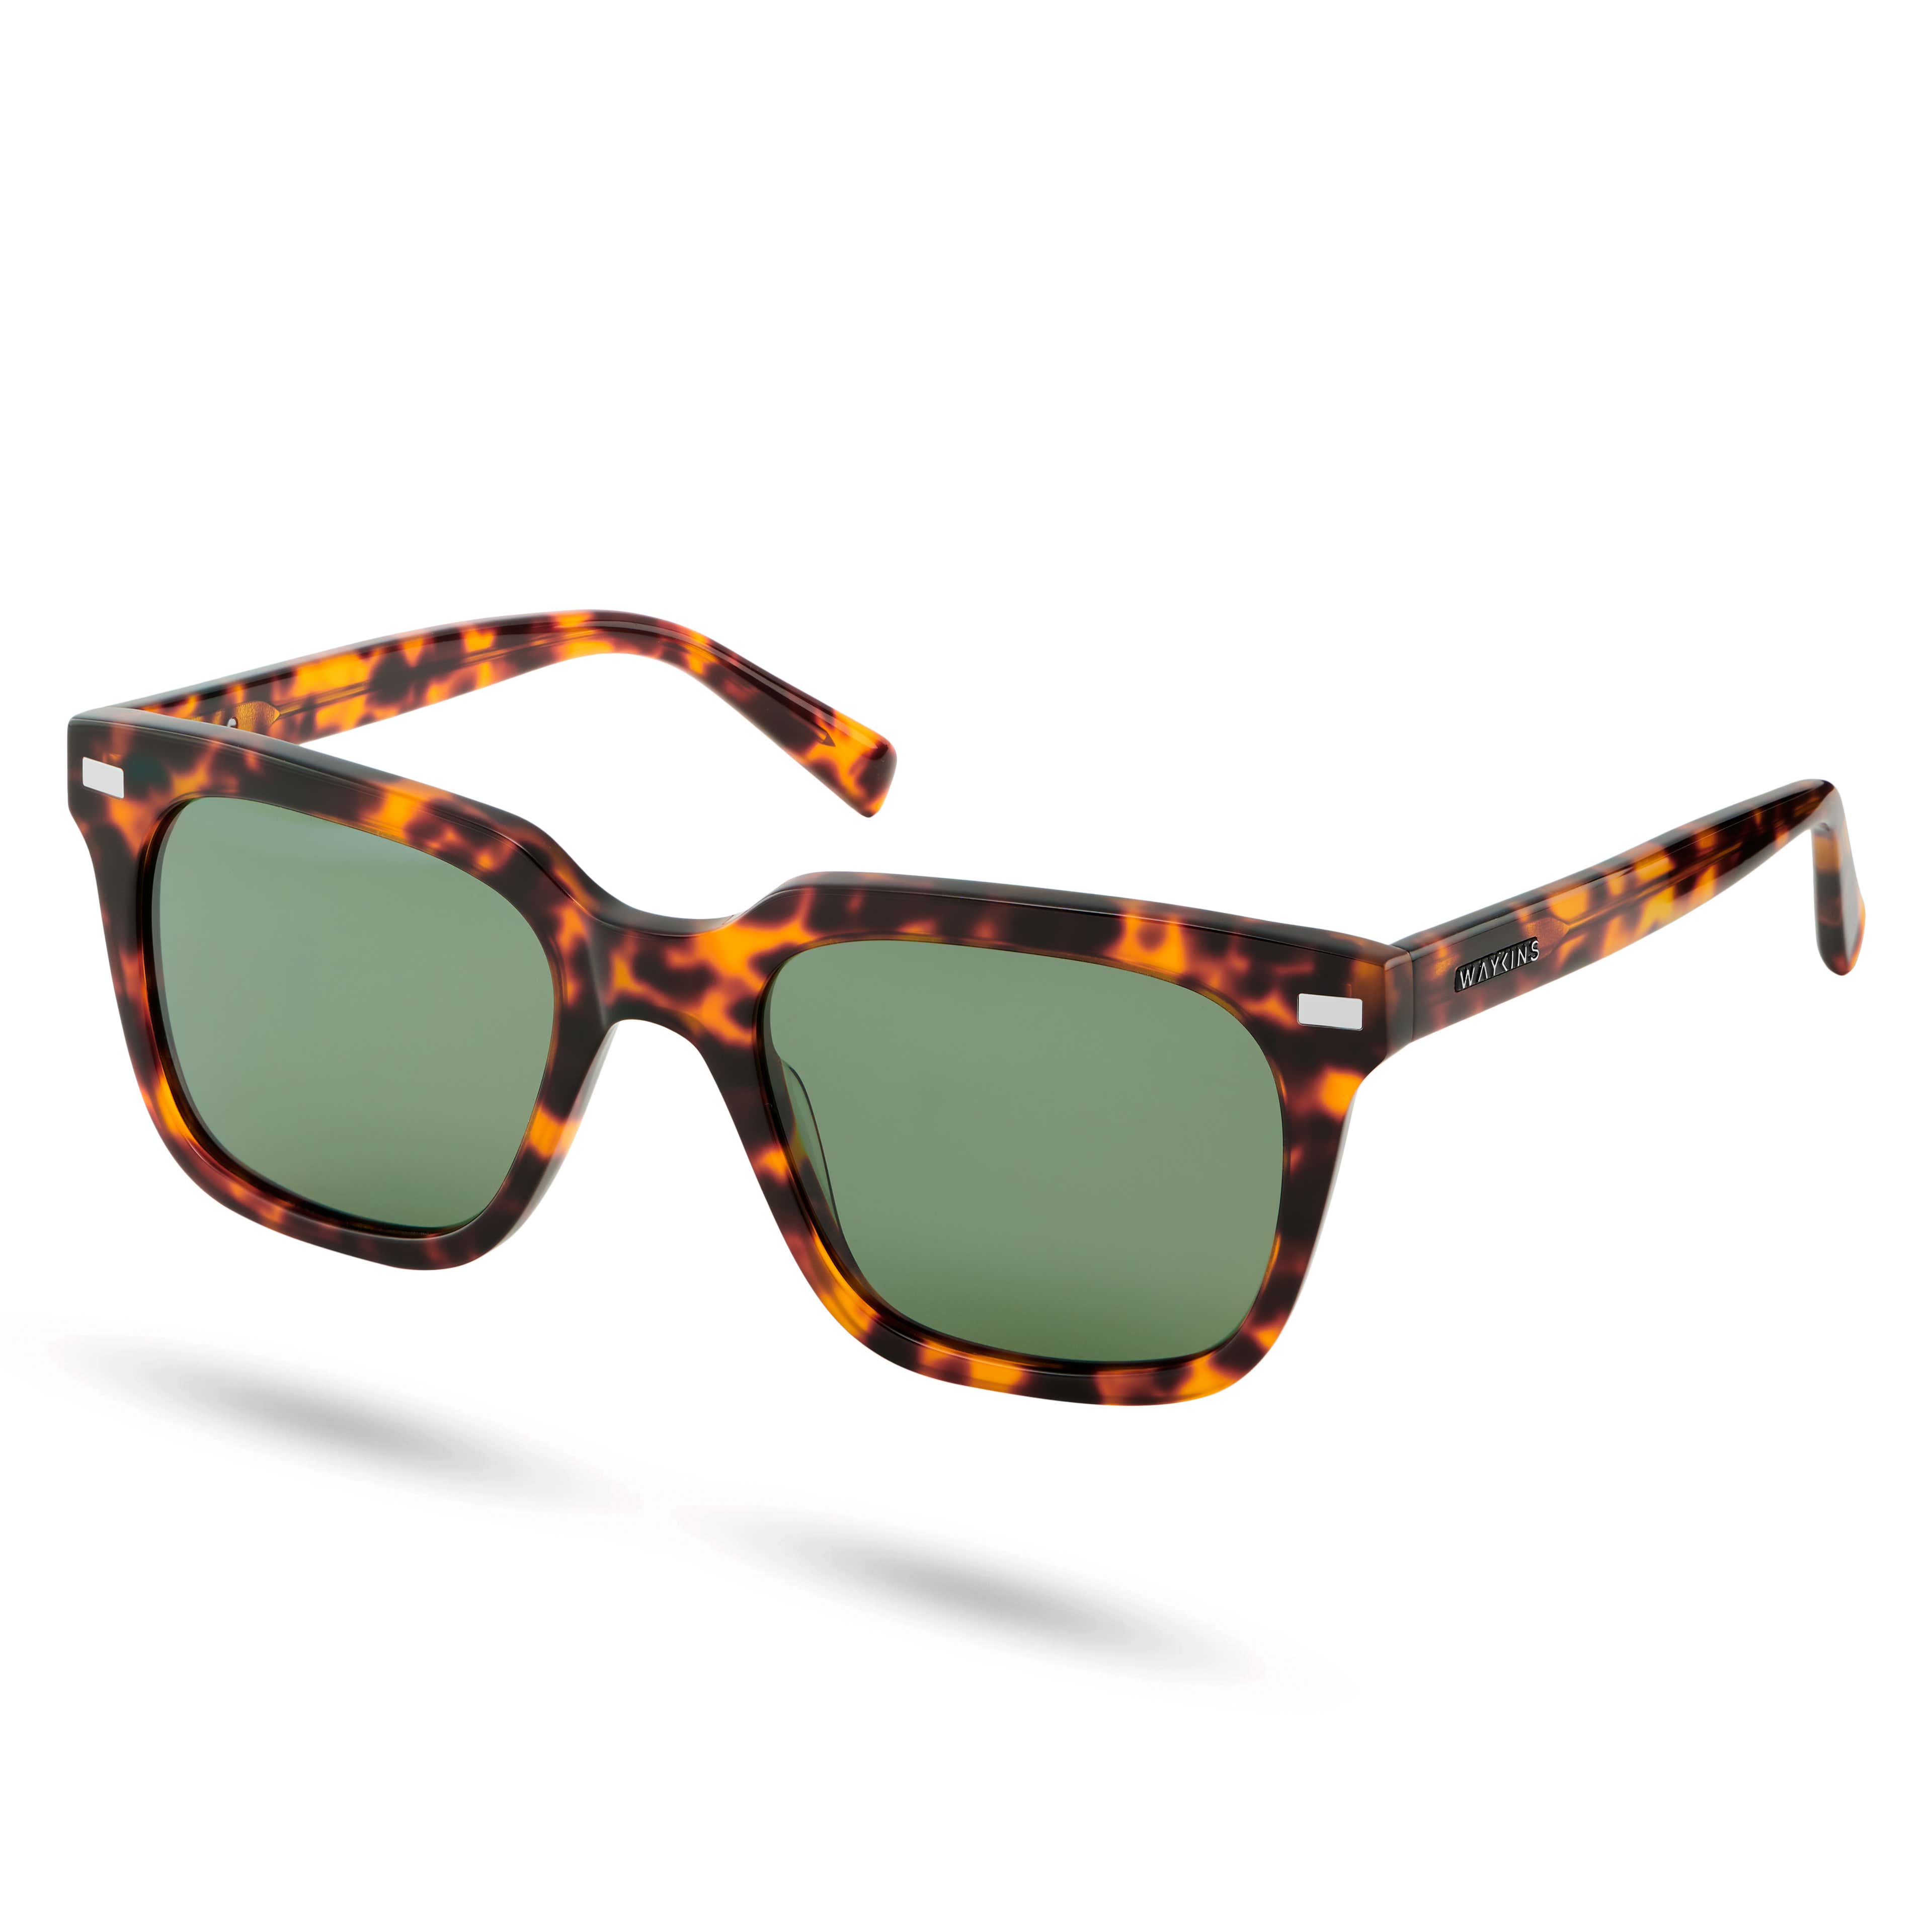 Wolfgang Thea Tortoise Shell & Green Polarized Sunglasses